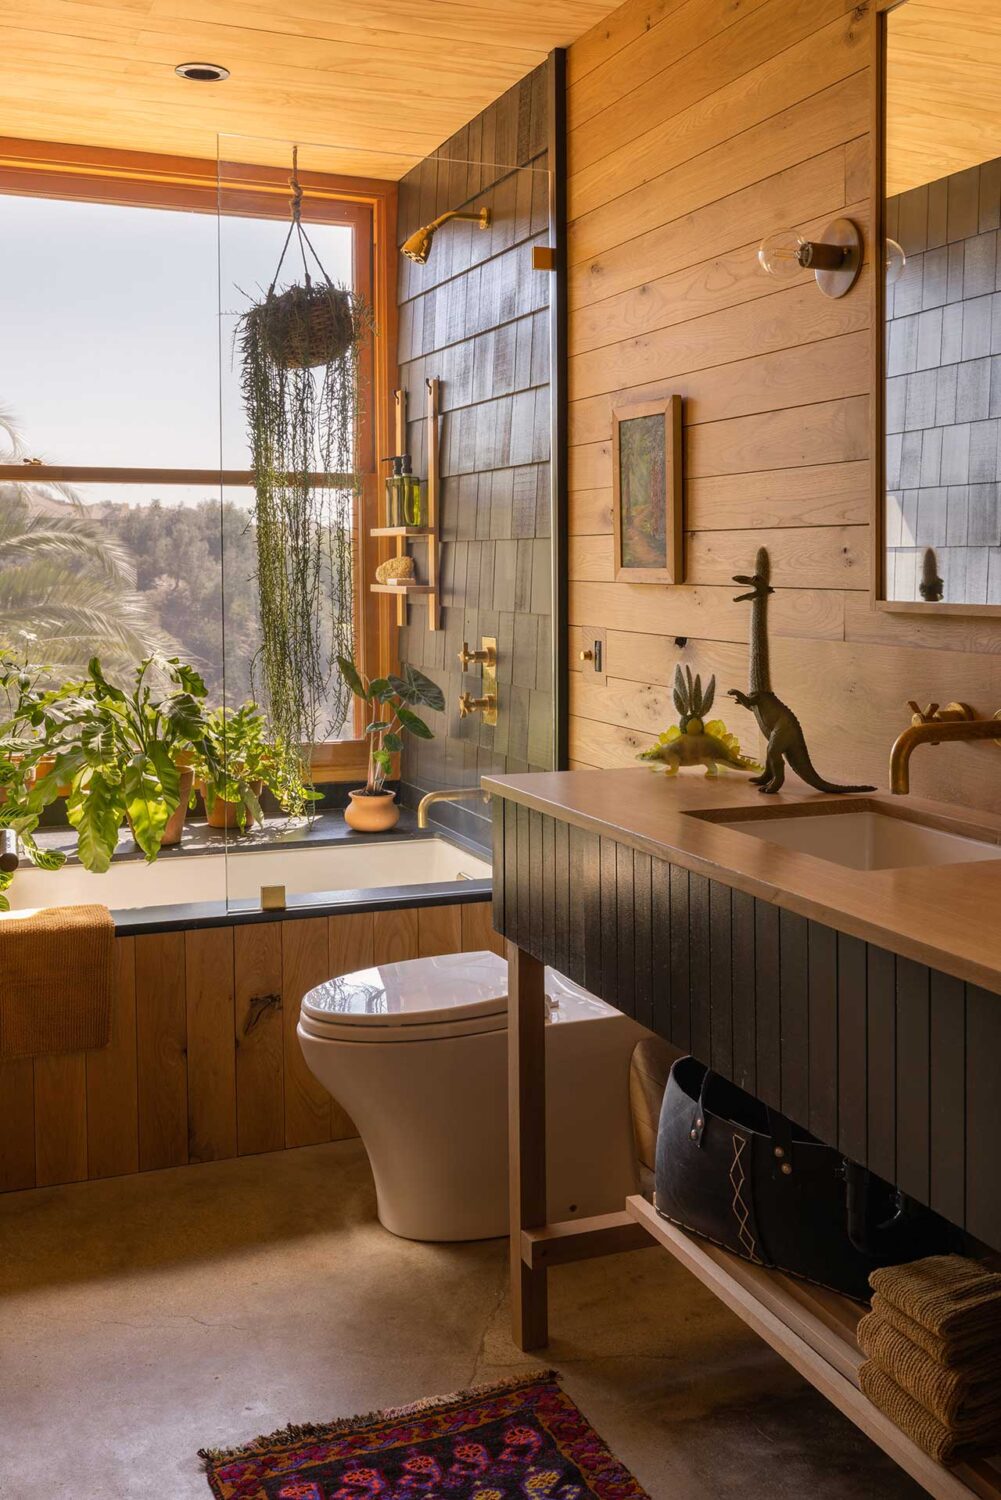 wooden-bathroom-large-window-view-nordroom